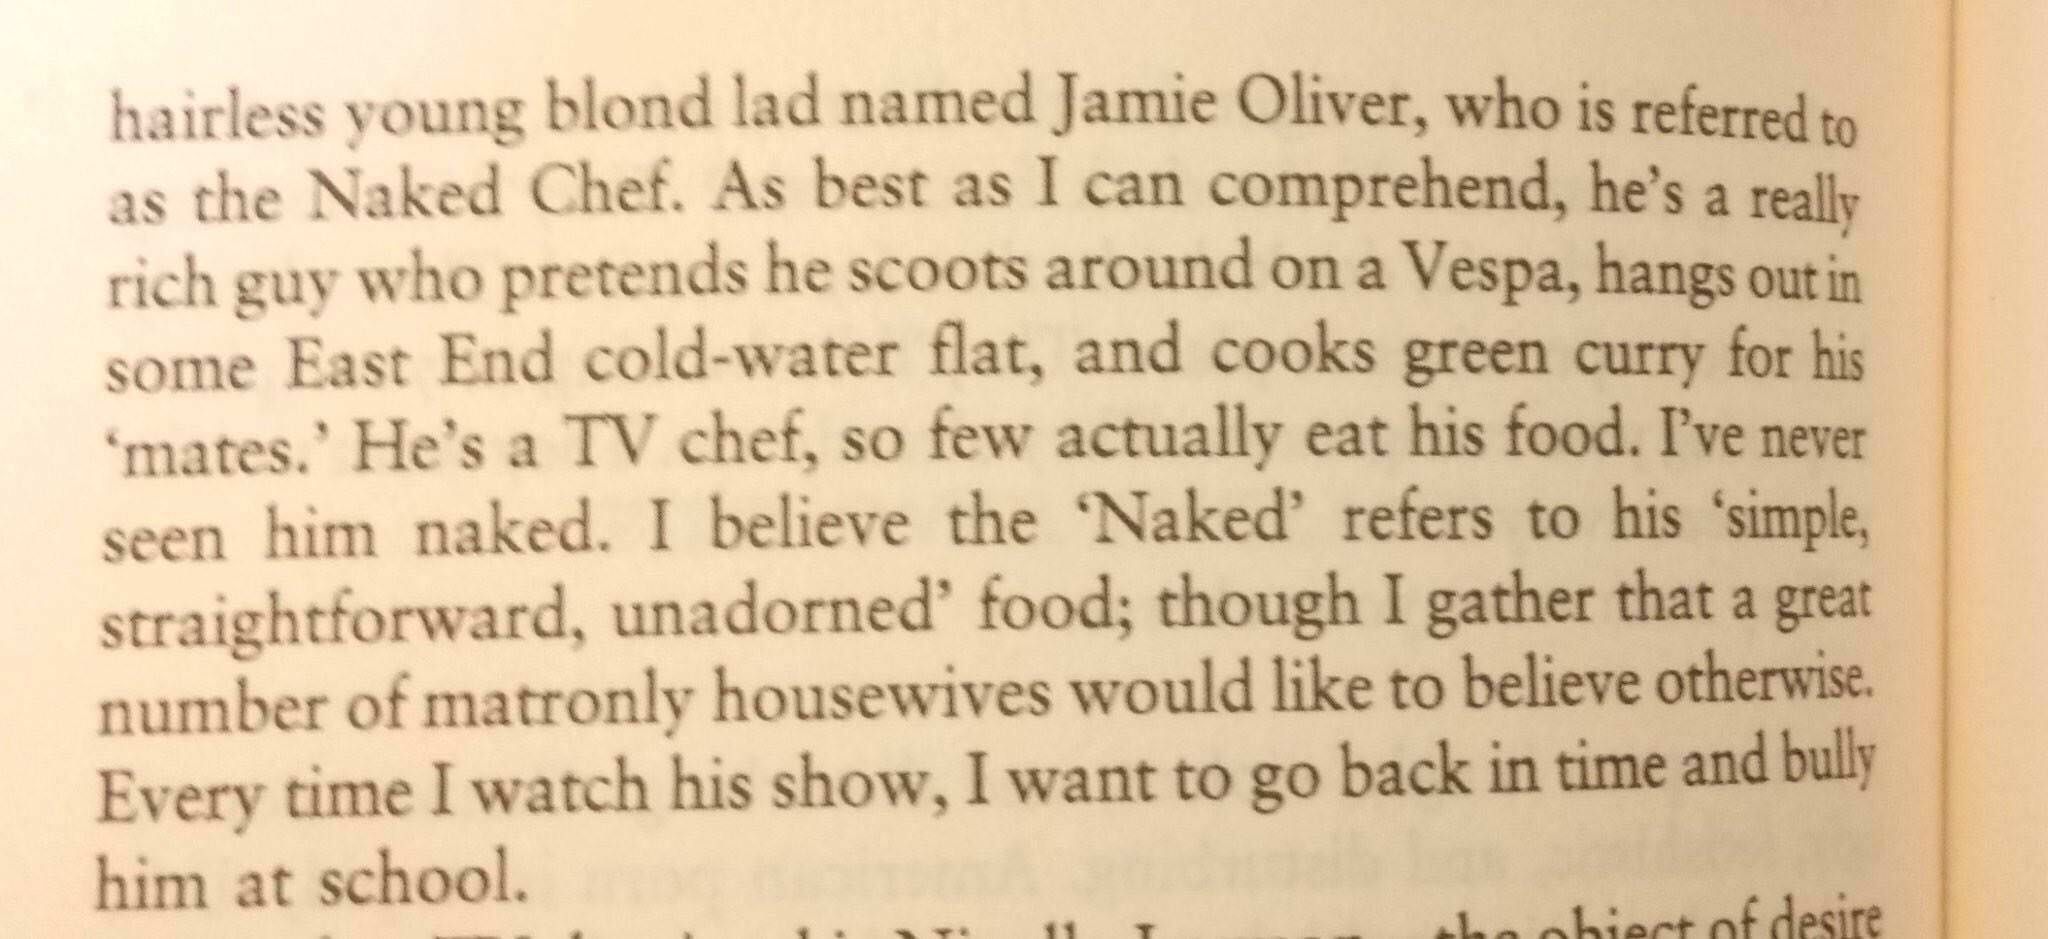 Anthony Bourdain on Jamie Oliver